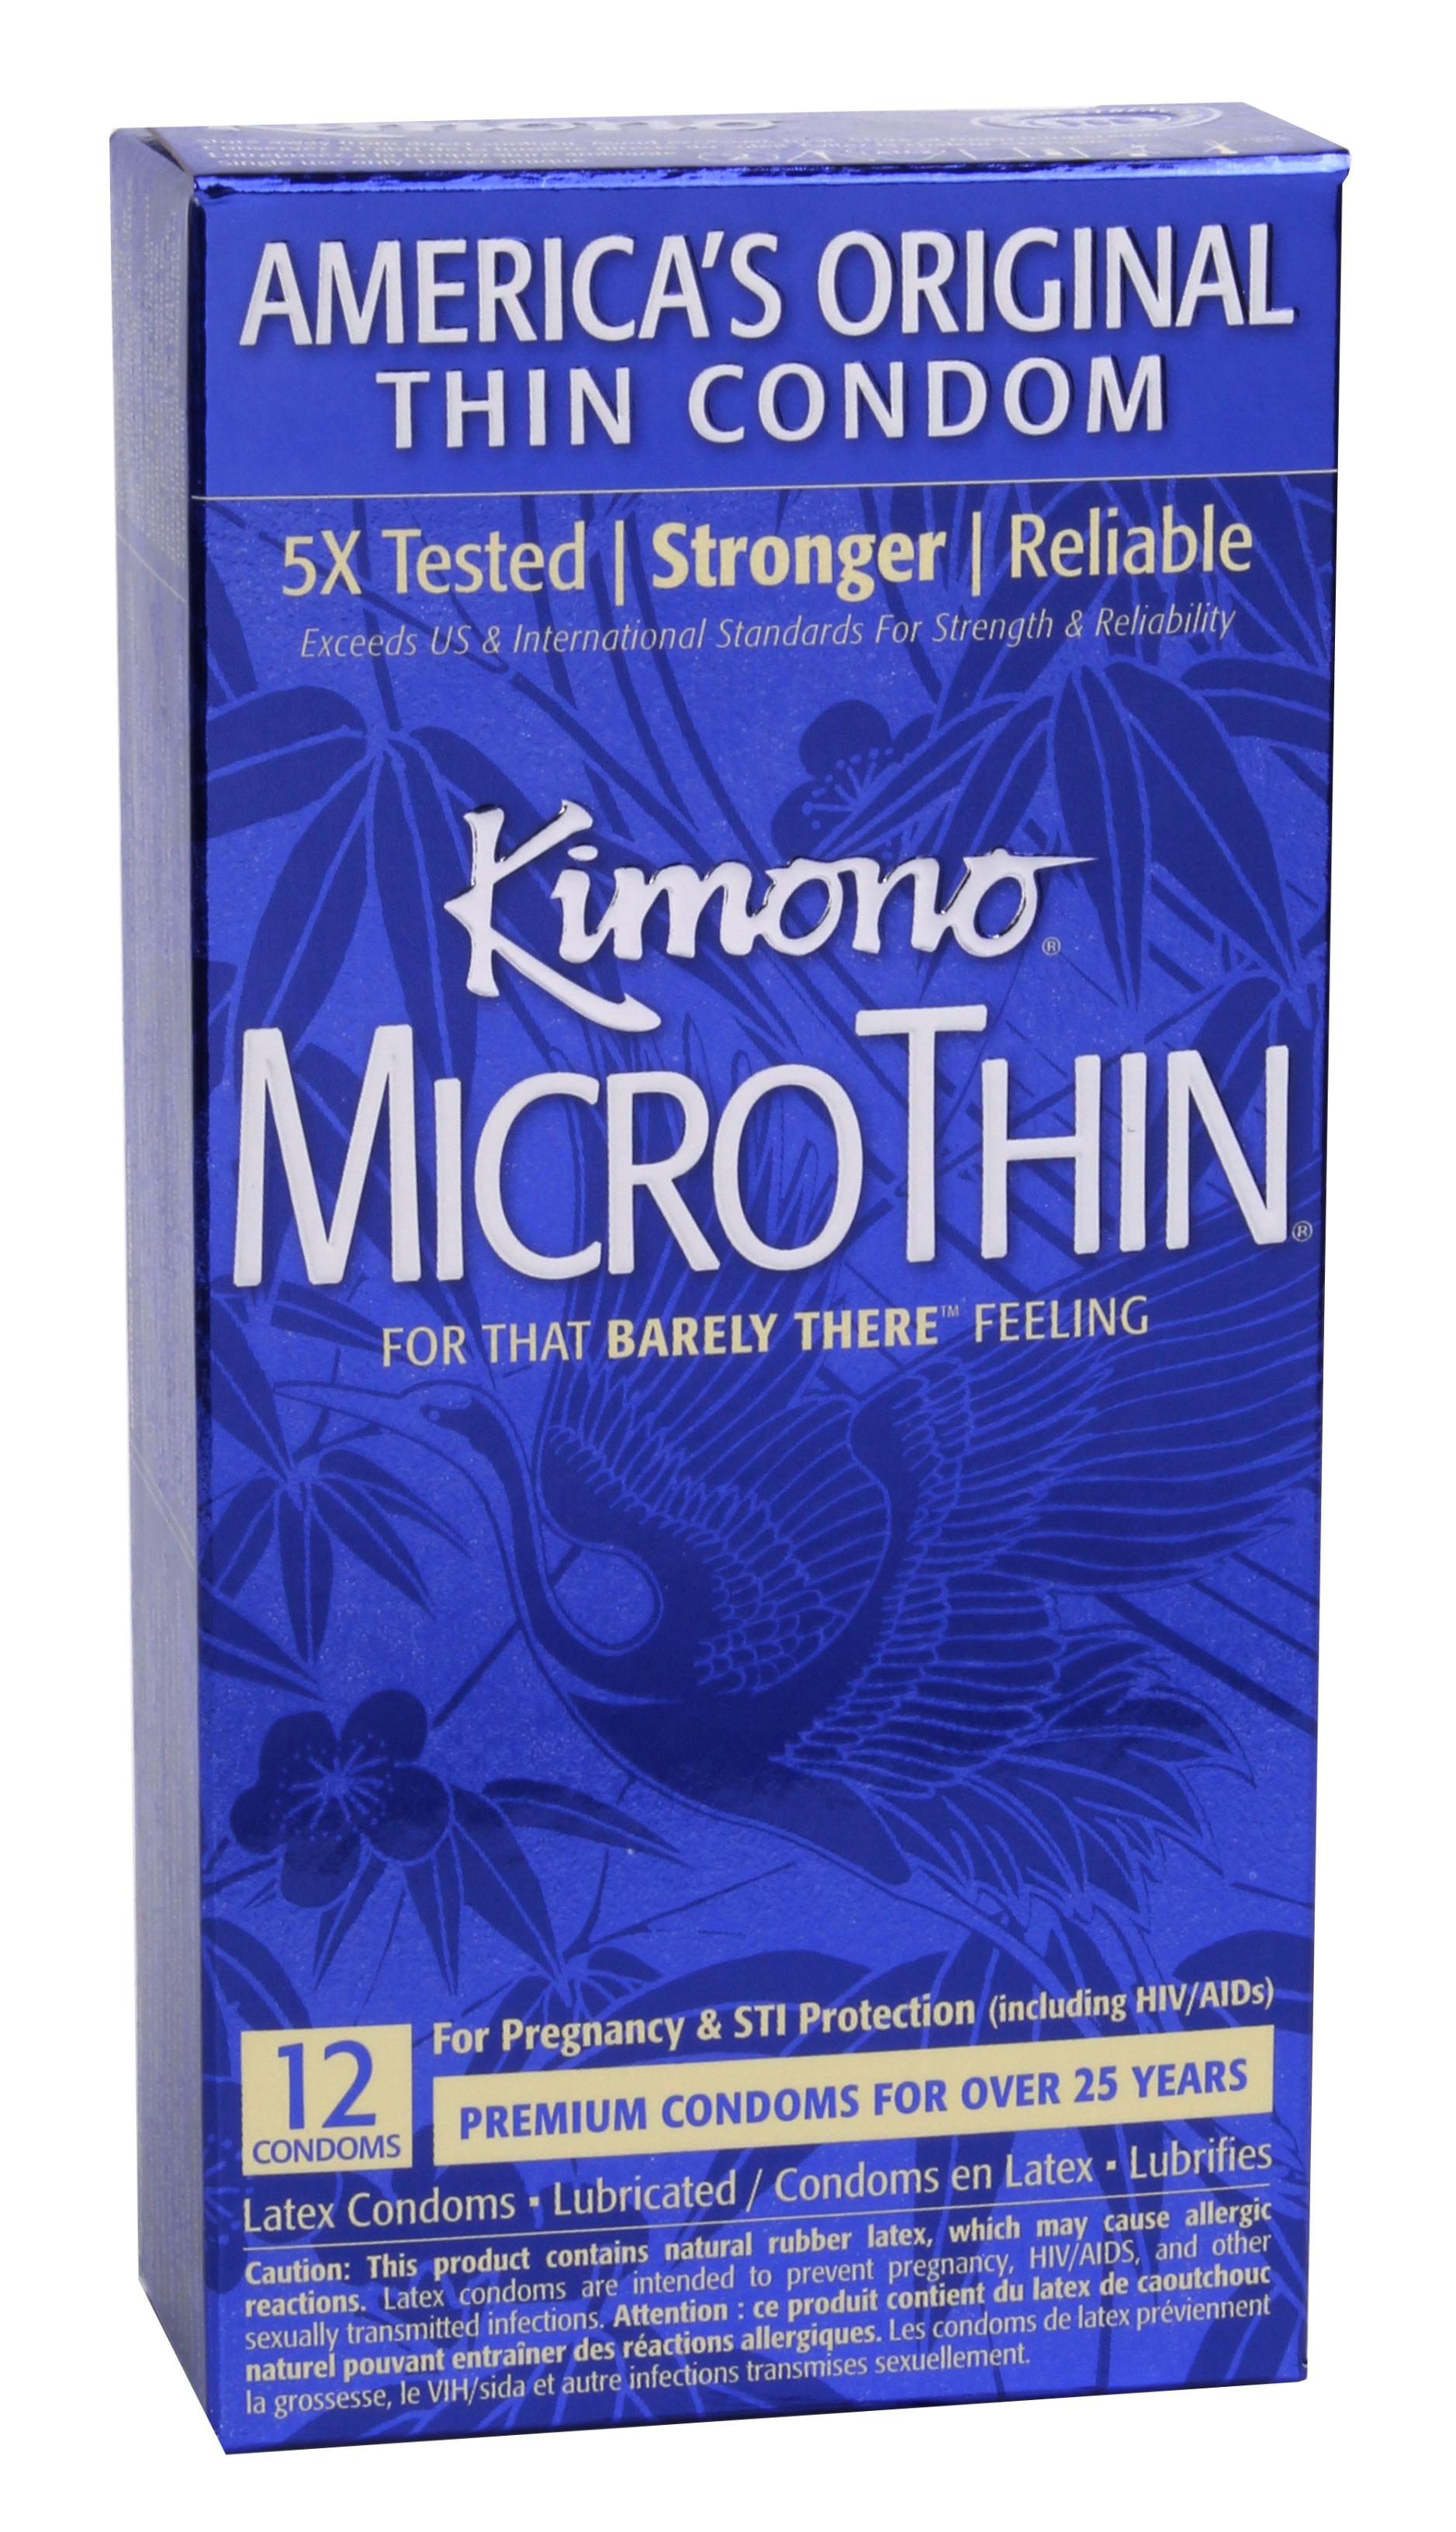 Kimono Microthin Ultrathin 12pk Paradise Products